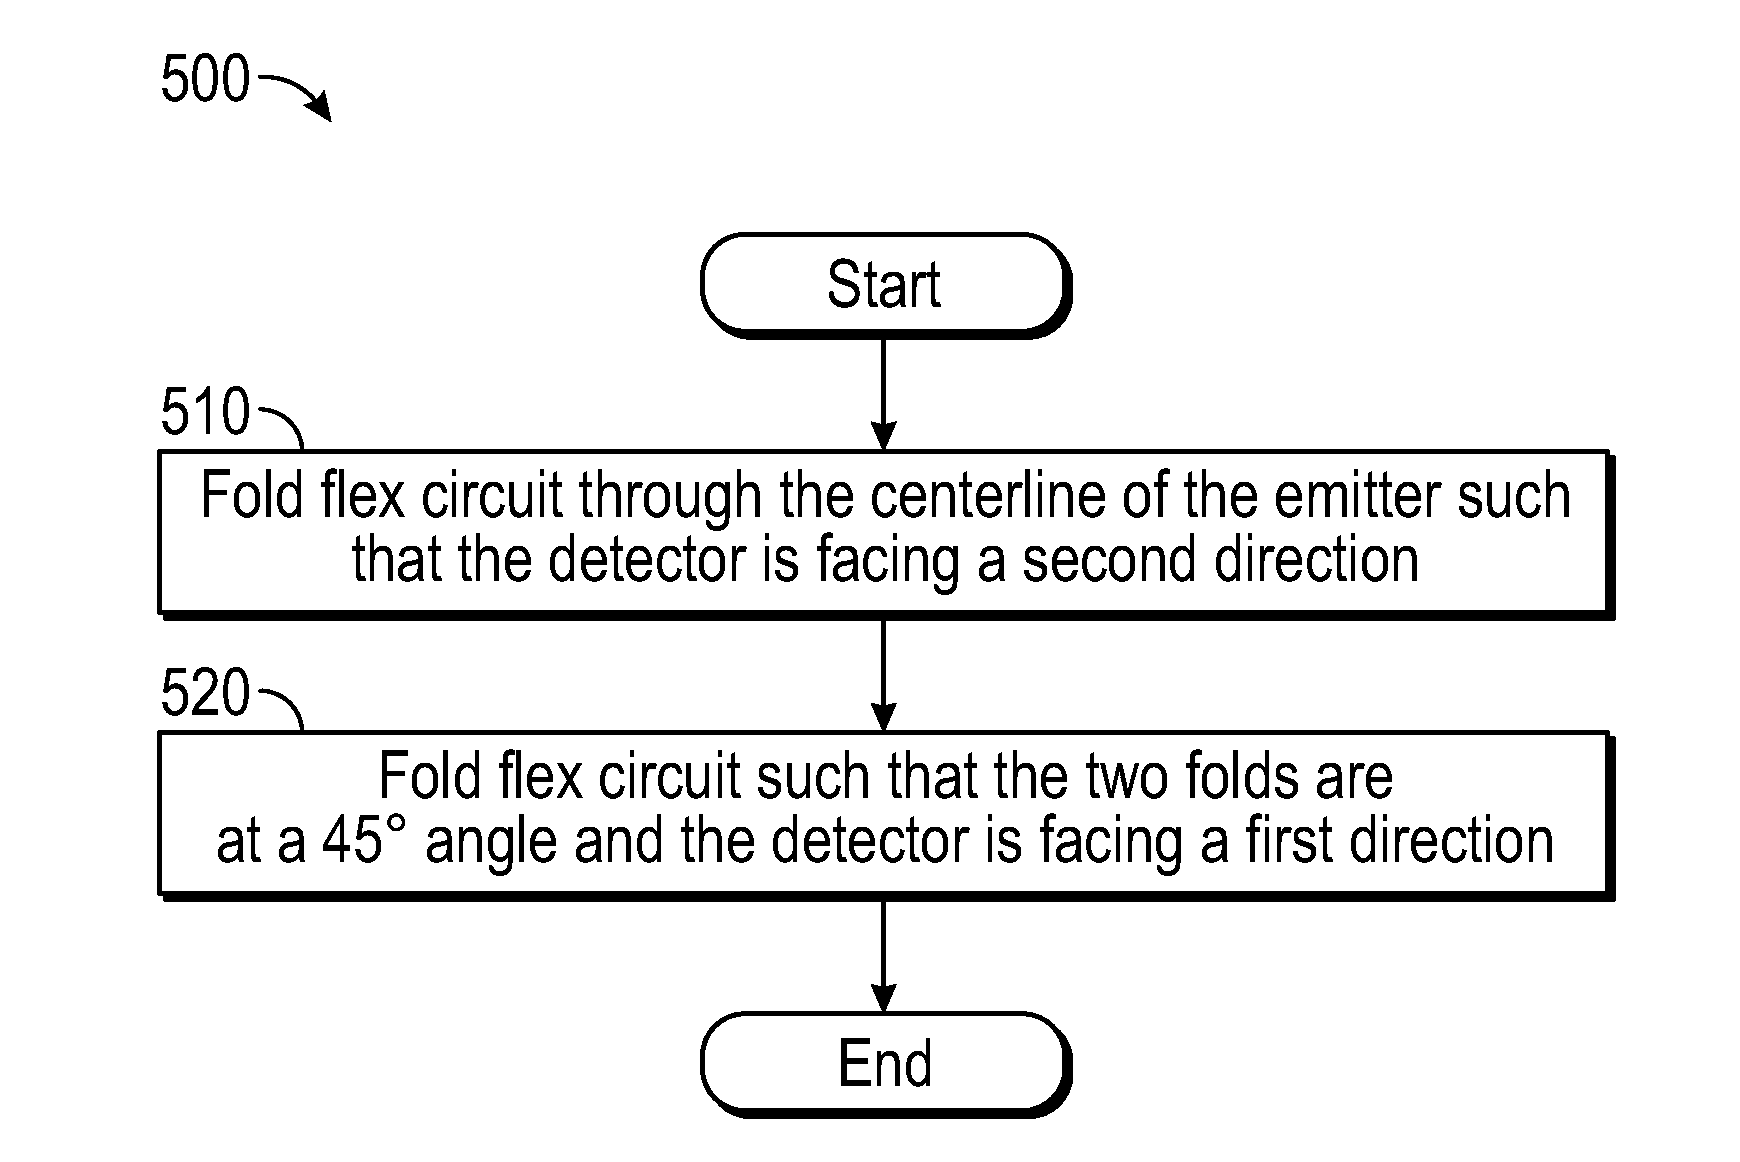 Fold flex circuit for lnop